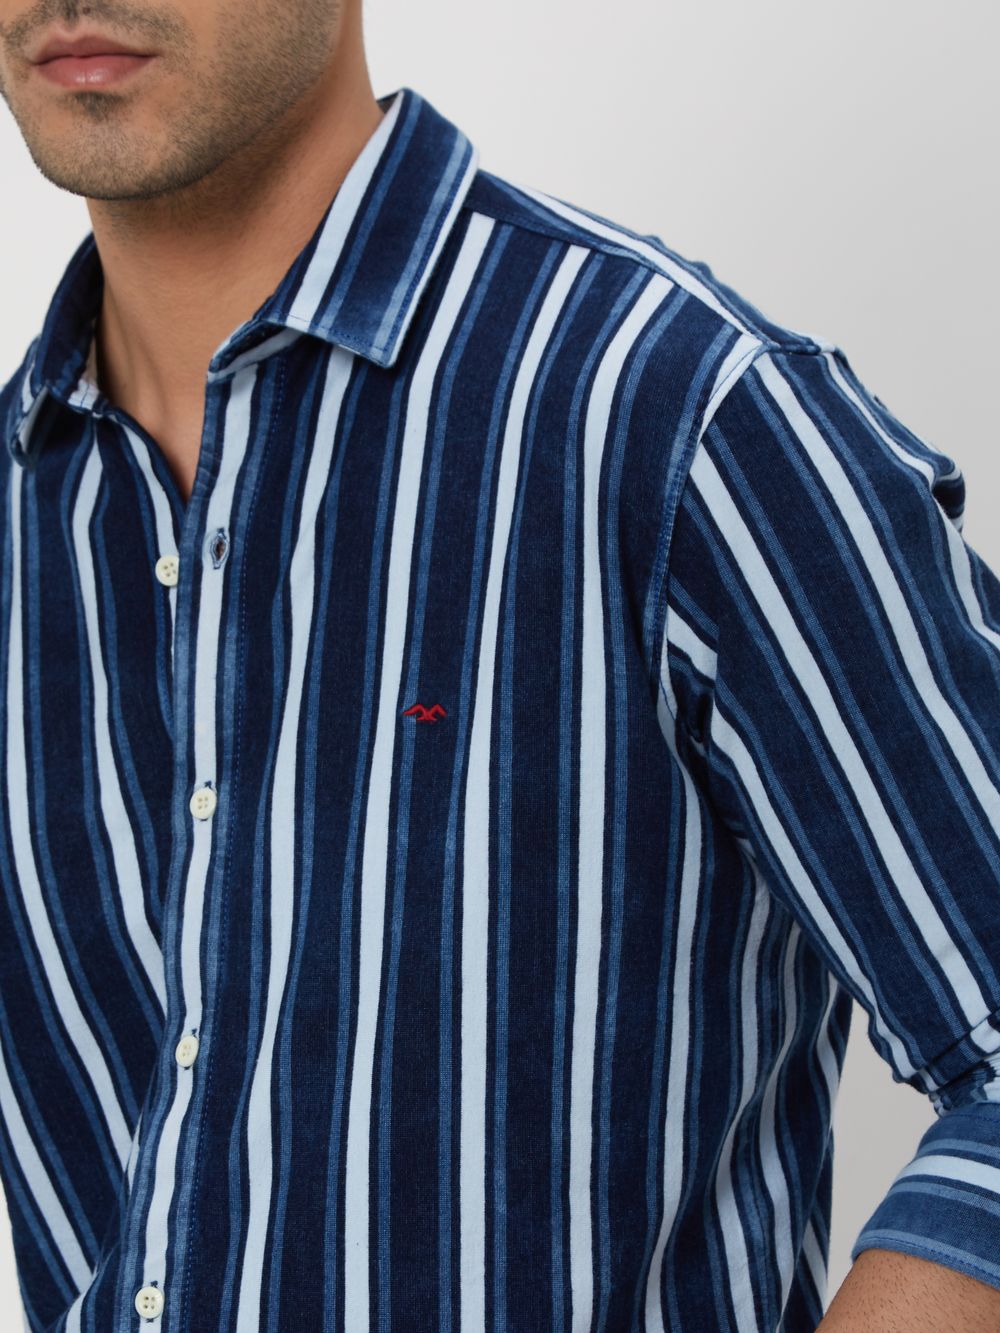 Indigo Blue & White Candy Stripe Shirt